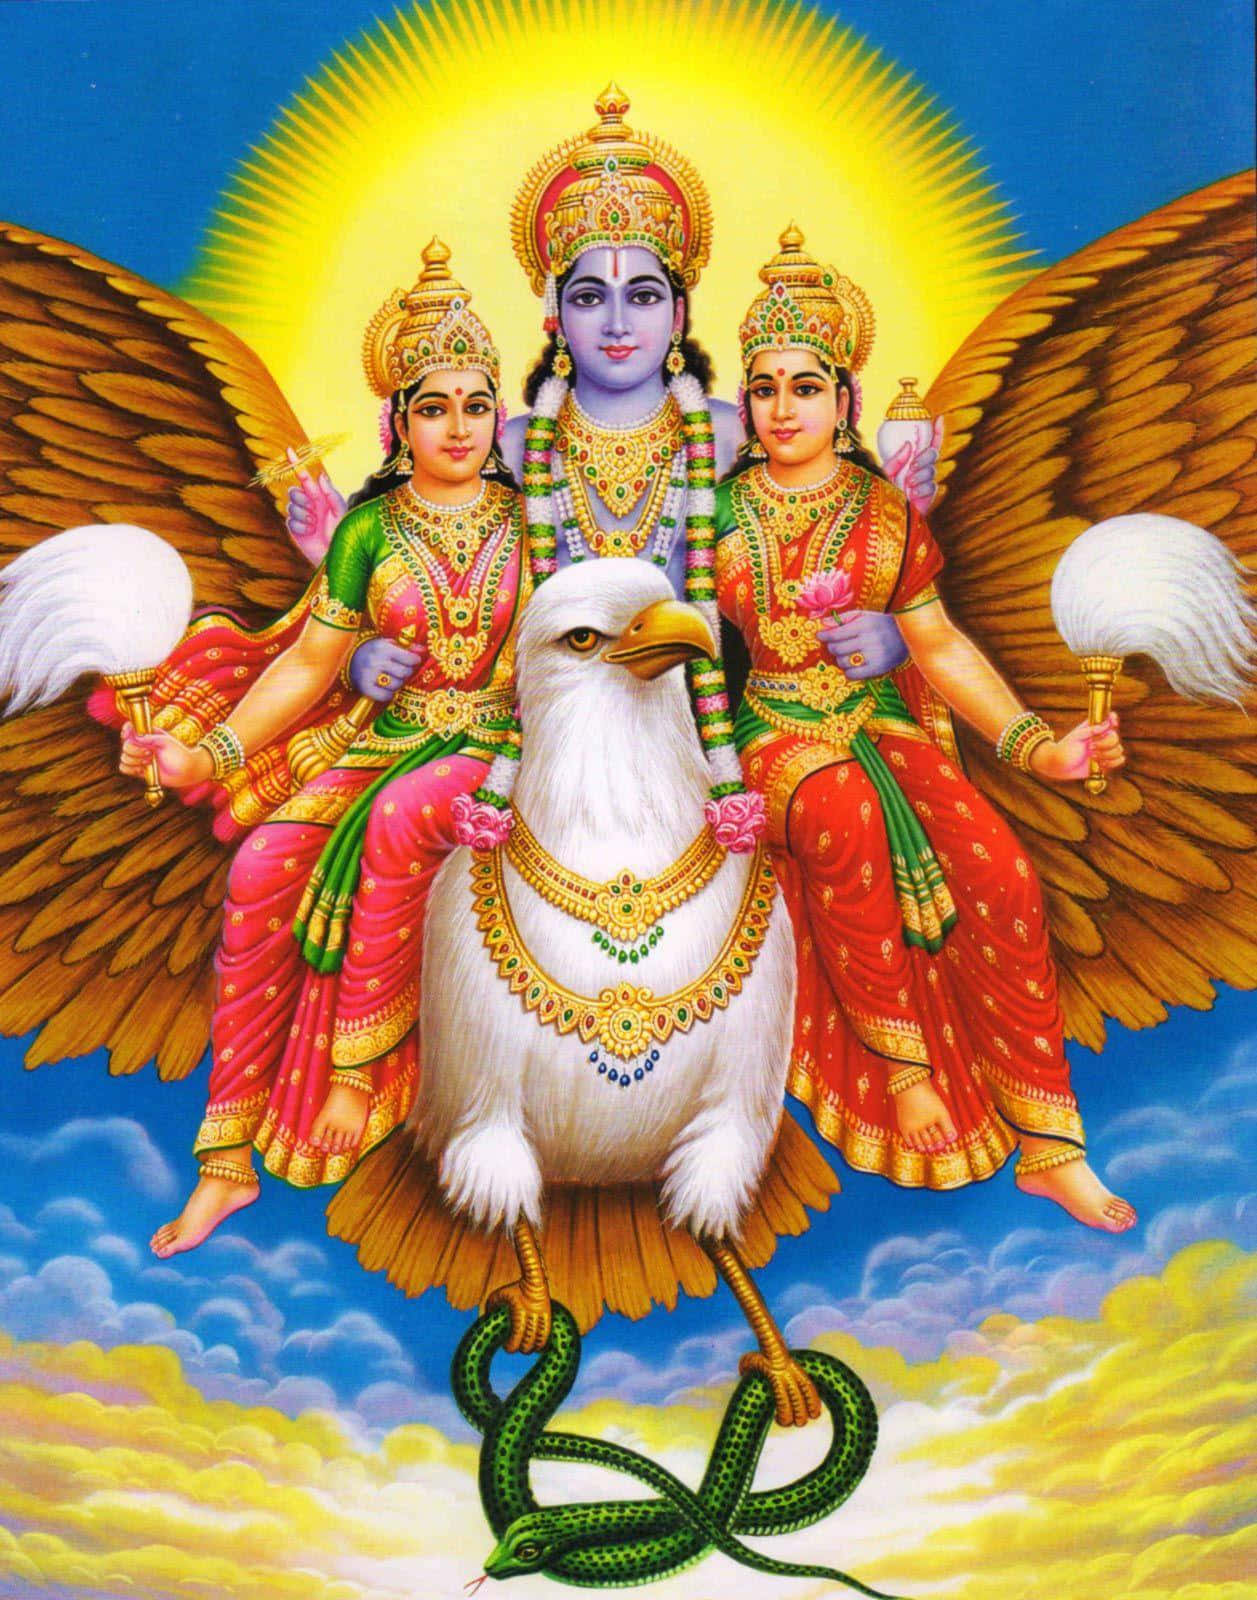 Imagendel Dios Hindú Vishnu